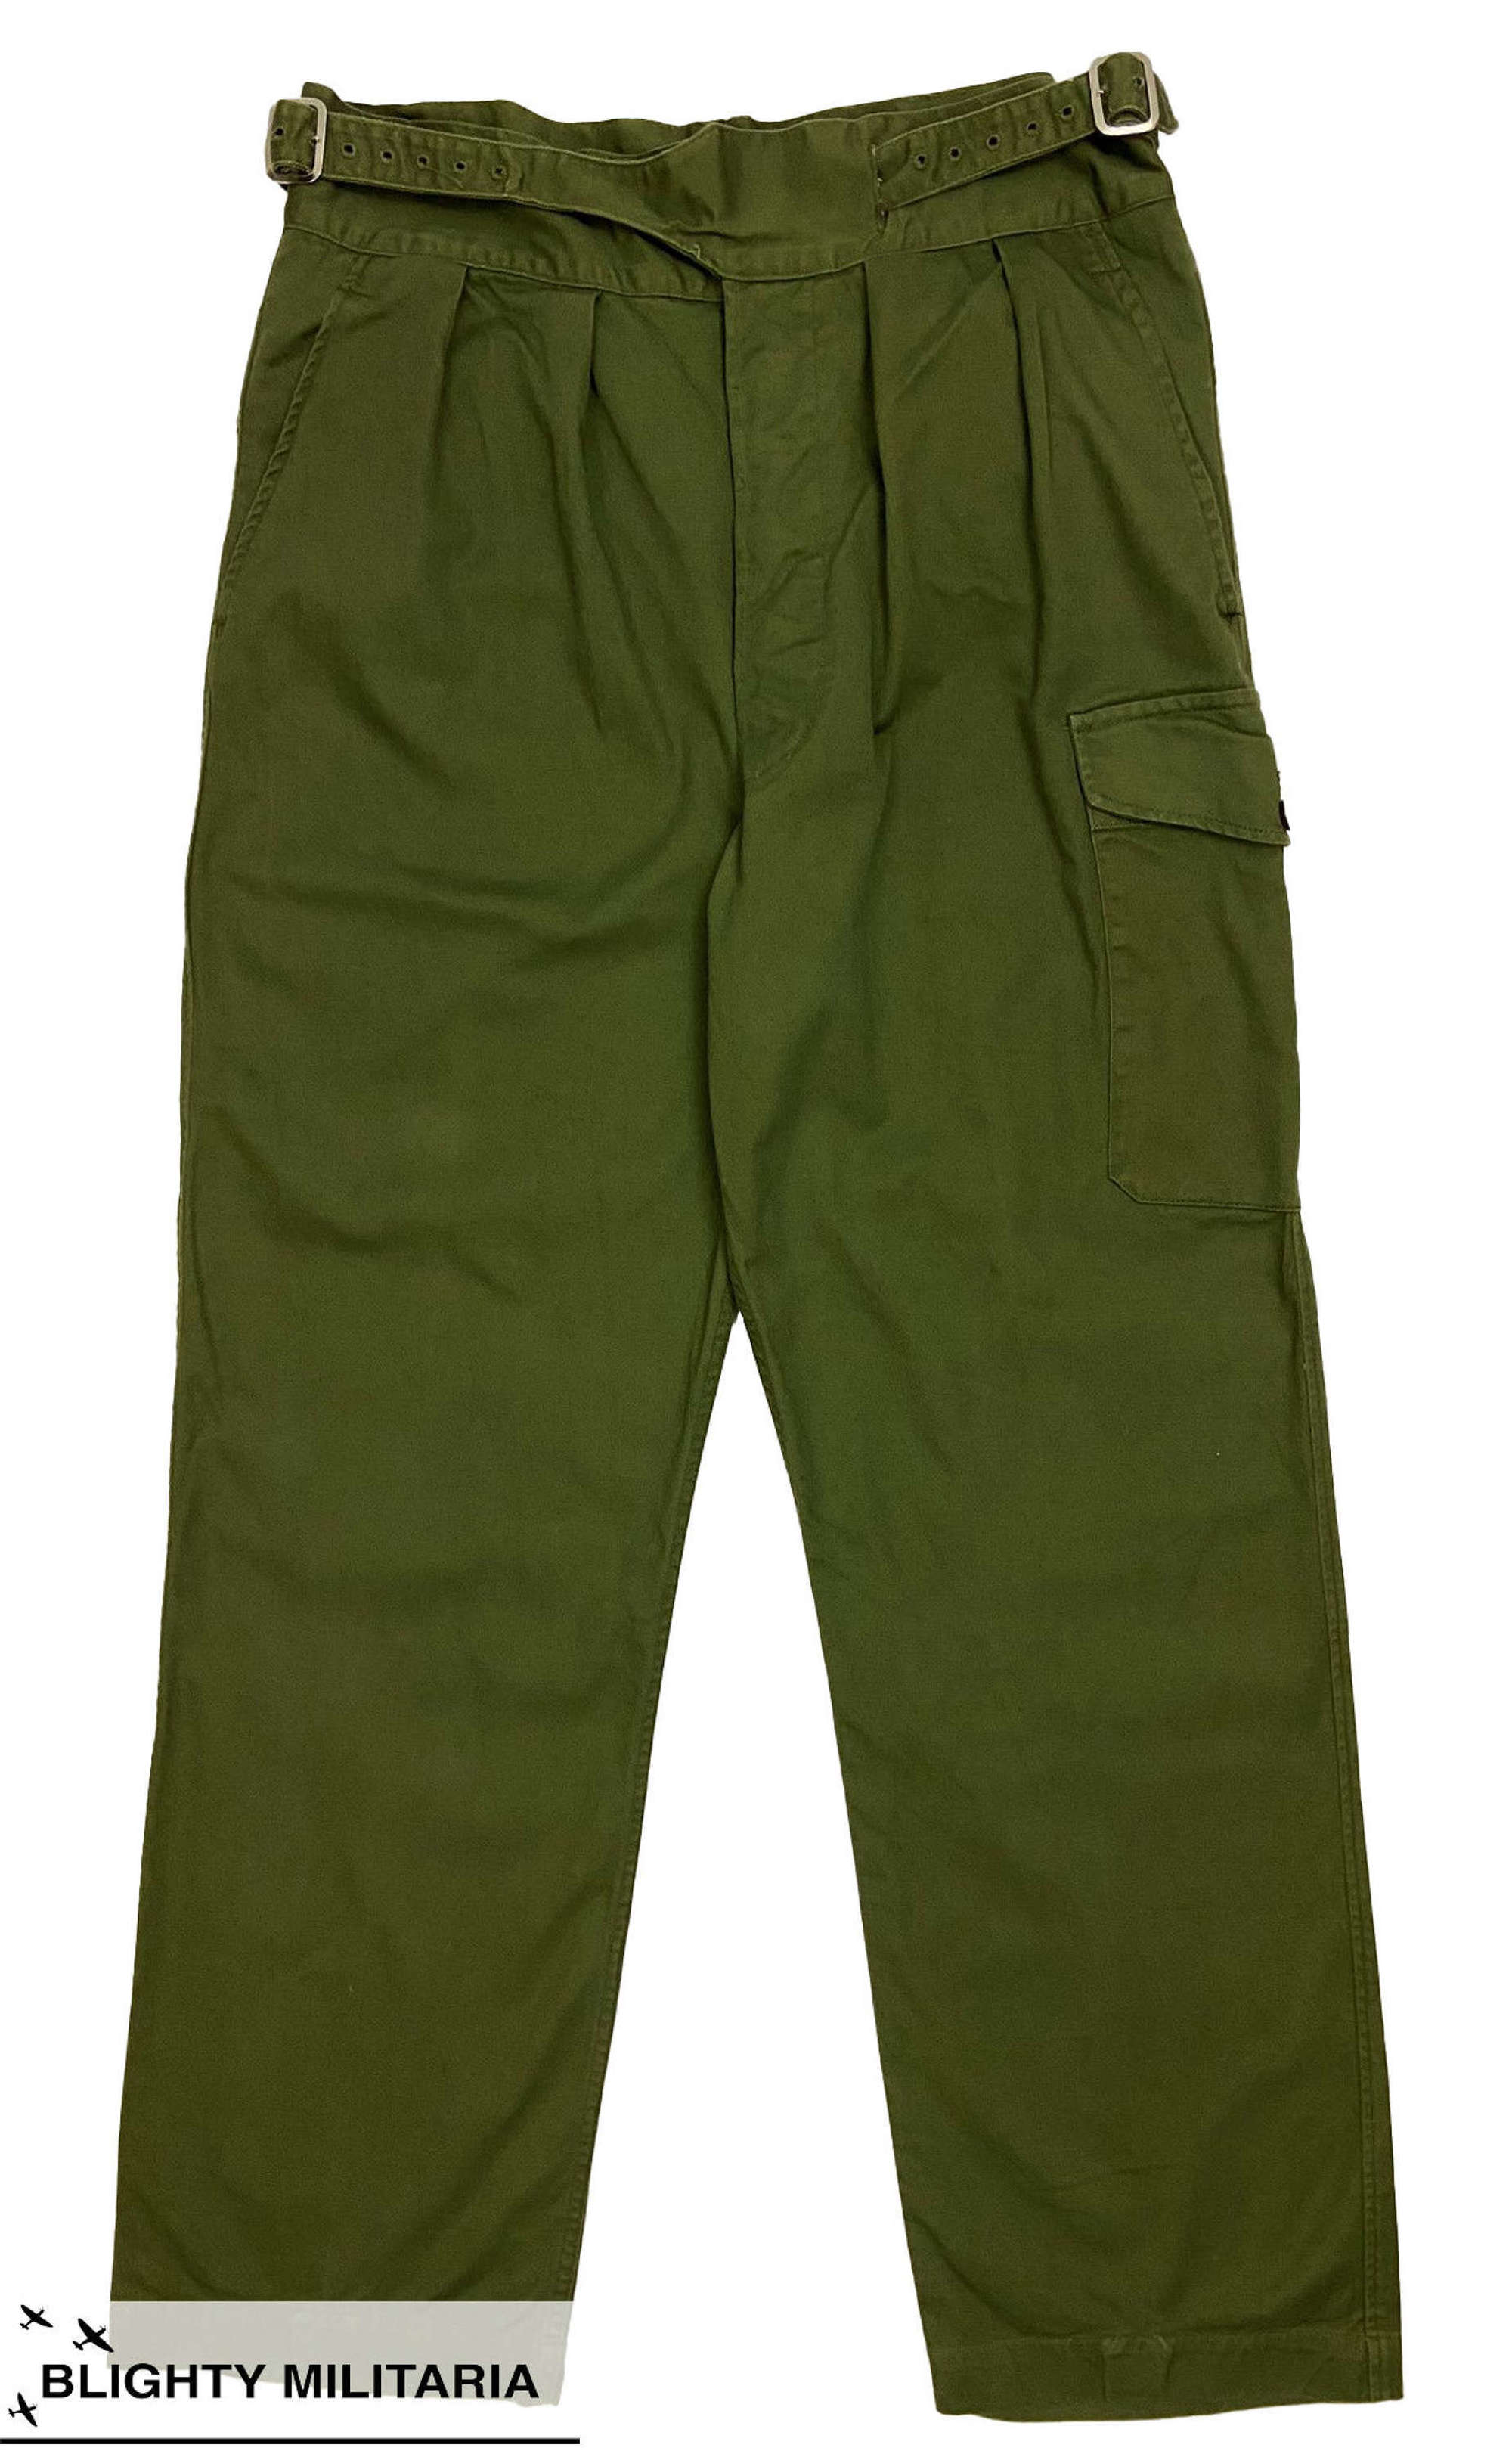 Original 1970s 1950 Pattern Jungle Green Trousers - Size 10